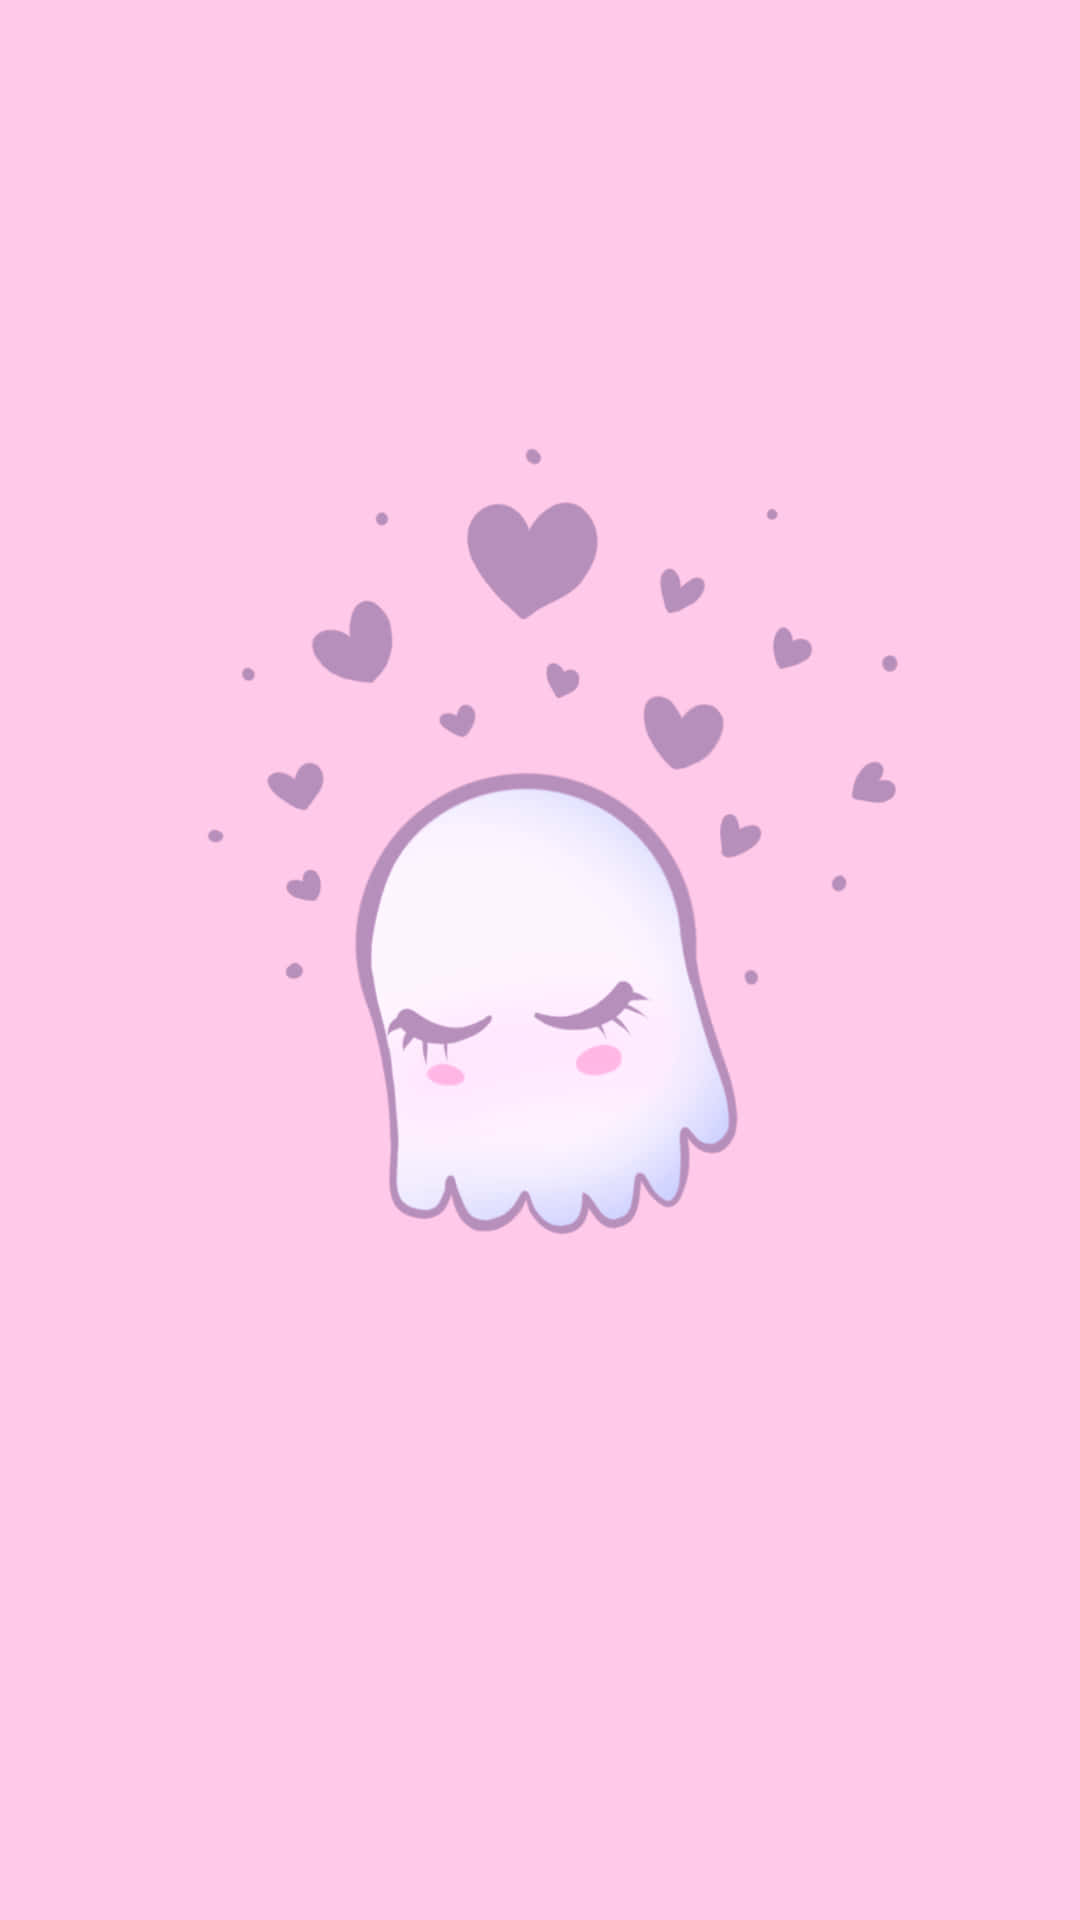 Boo And Stuff Hearts Wallpaper